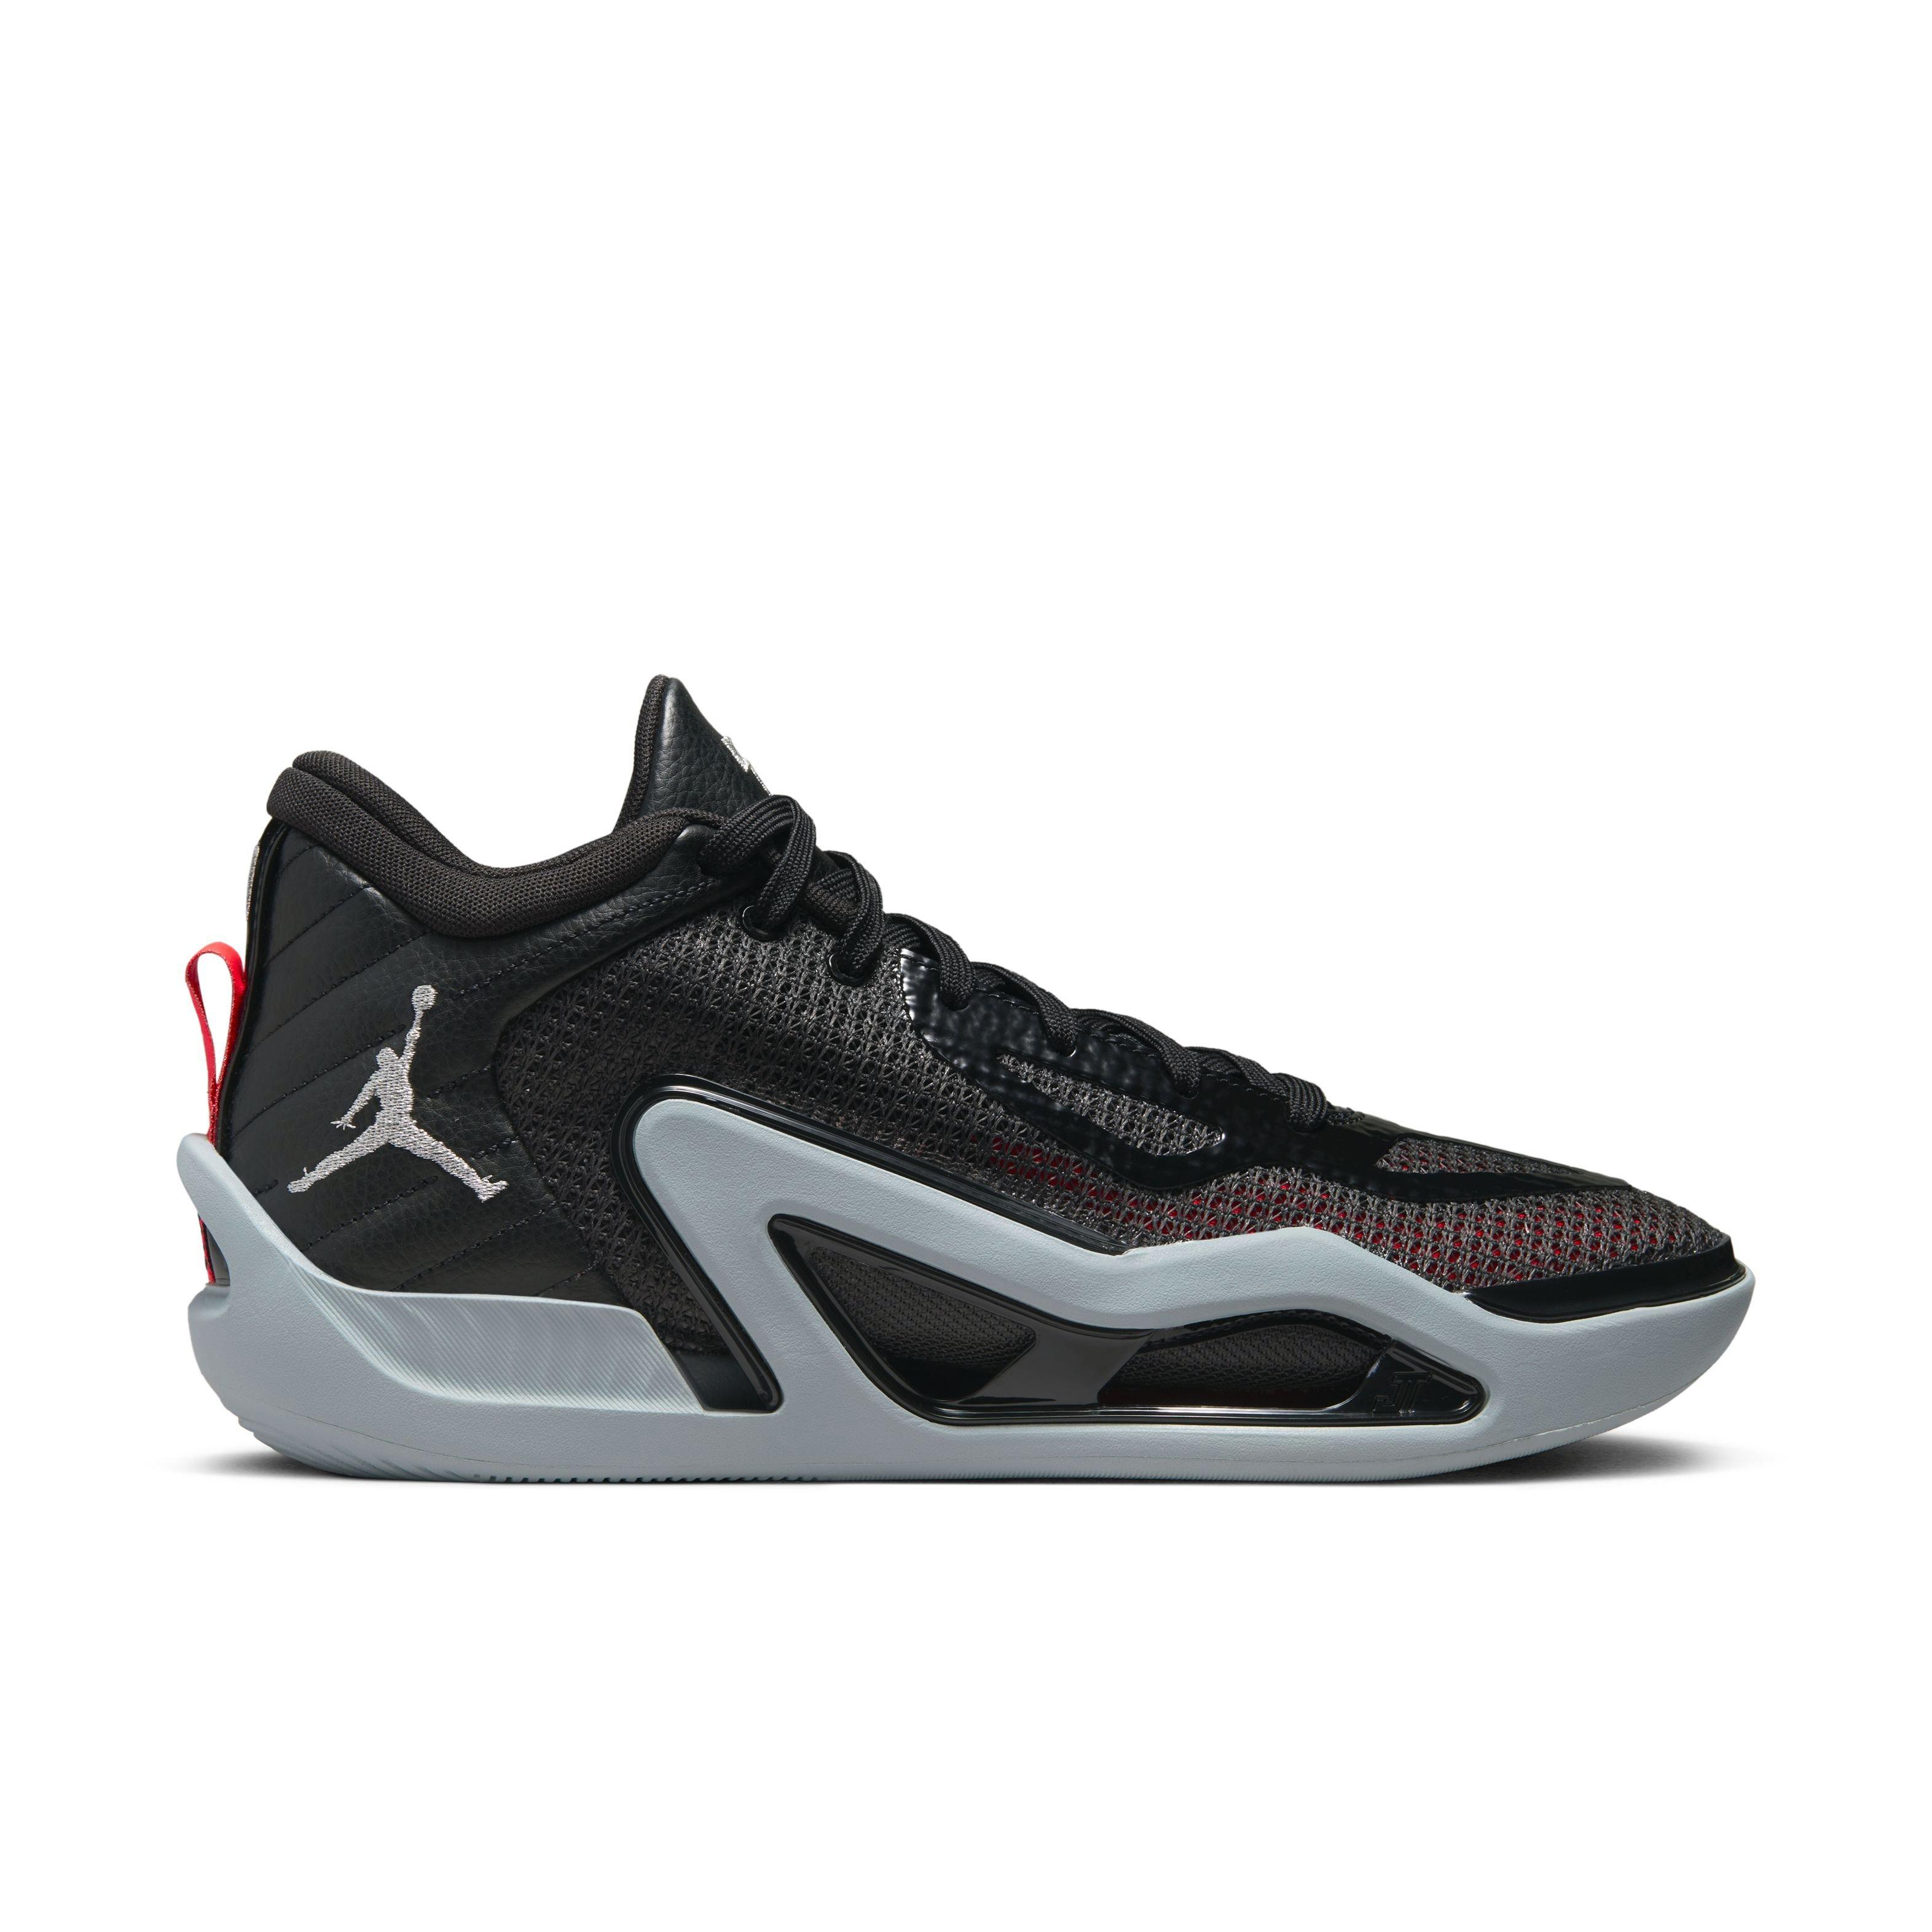 Air Jordan Jayson Tatum 1 St Louis Shoes Mens 10 US Basketball